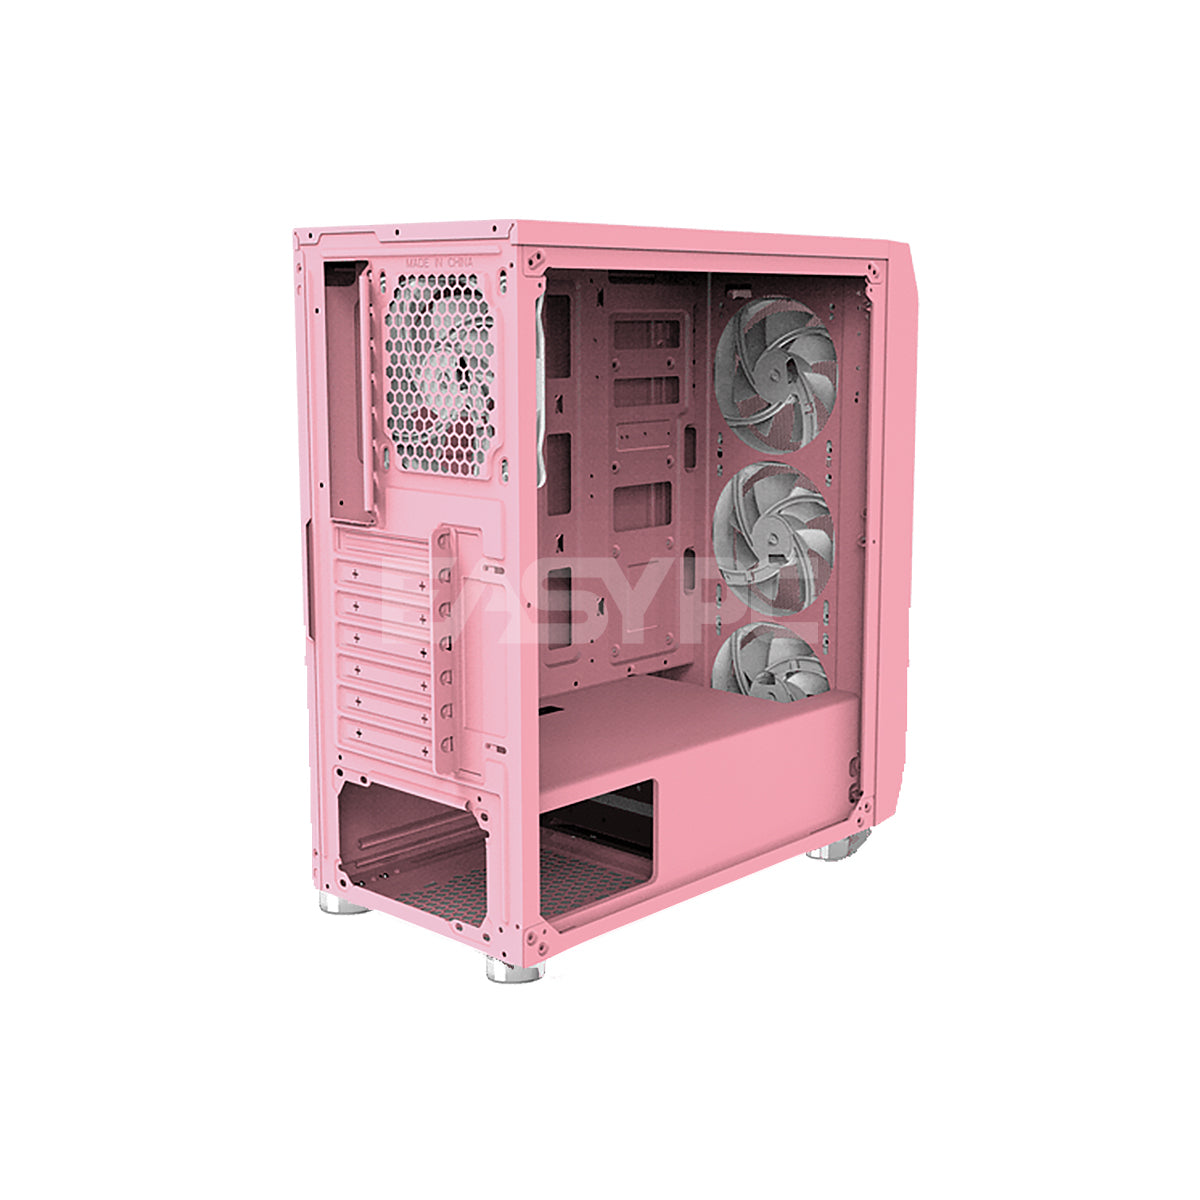 Fantech Aero Mid Tower Case Pink-c